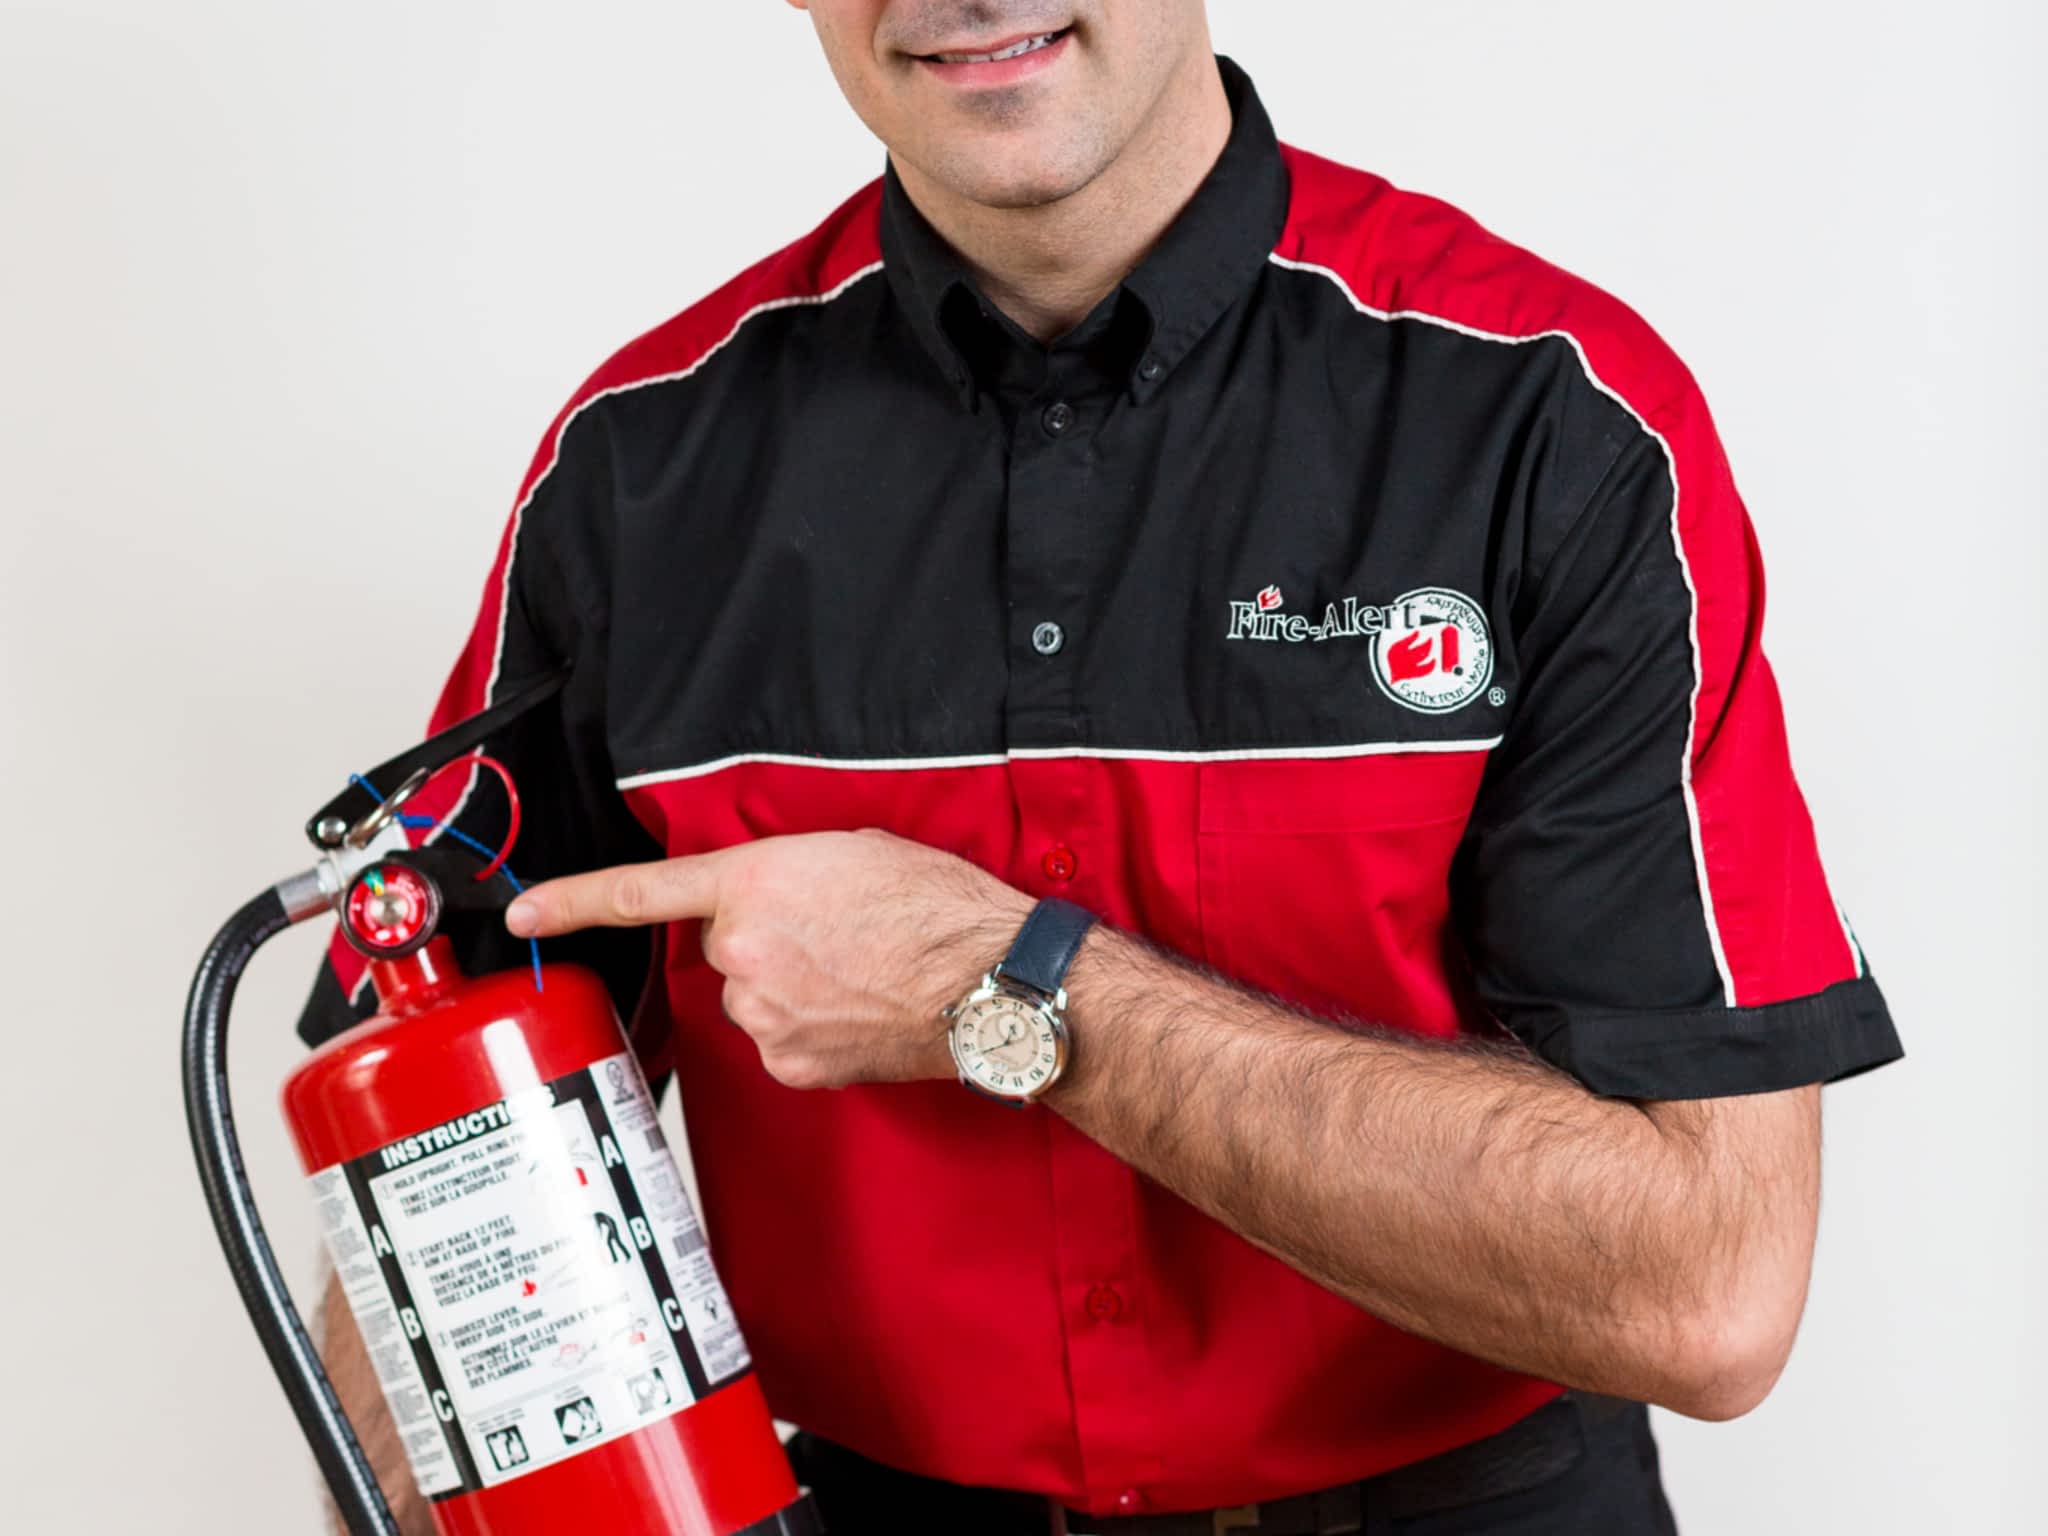 photo Fire-Alert Mobile Extinguishers